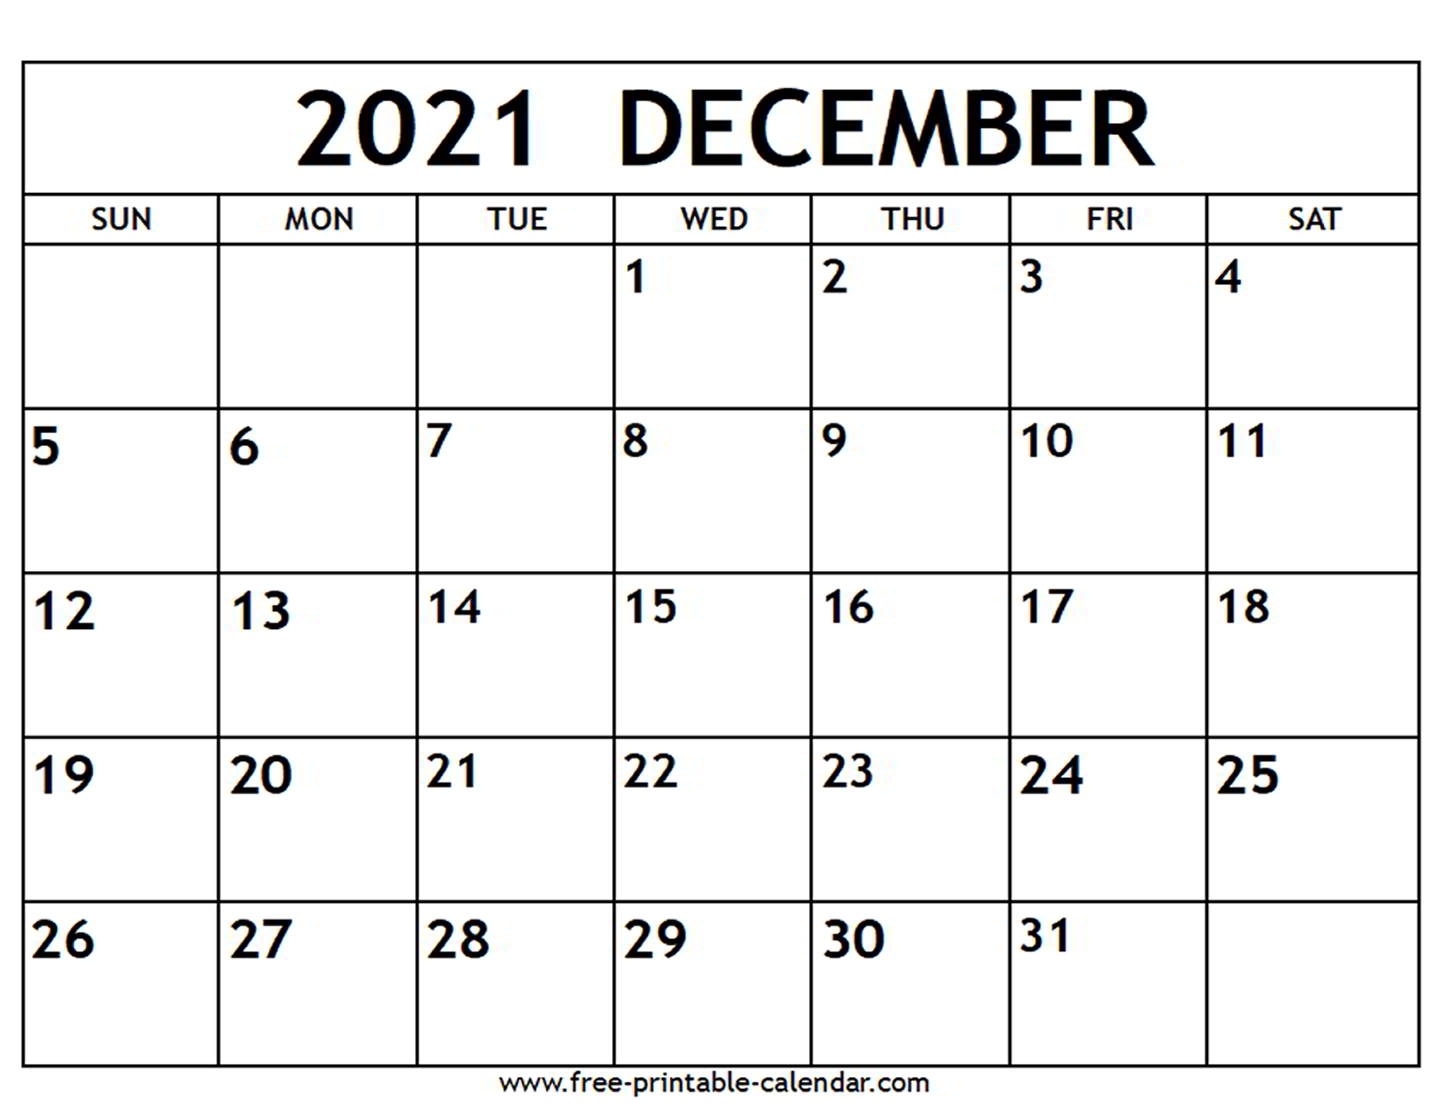 December 2021 Calendar - Free-Printable-Calendar December 21St 2021 Mayan Calendar